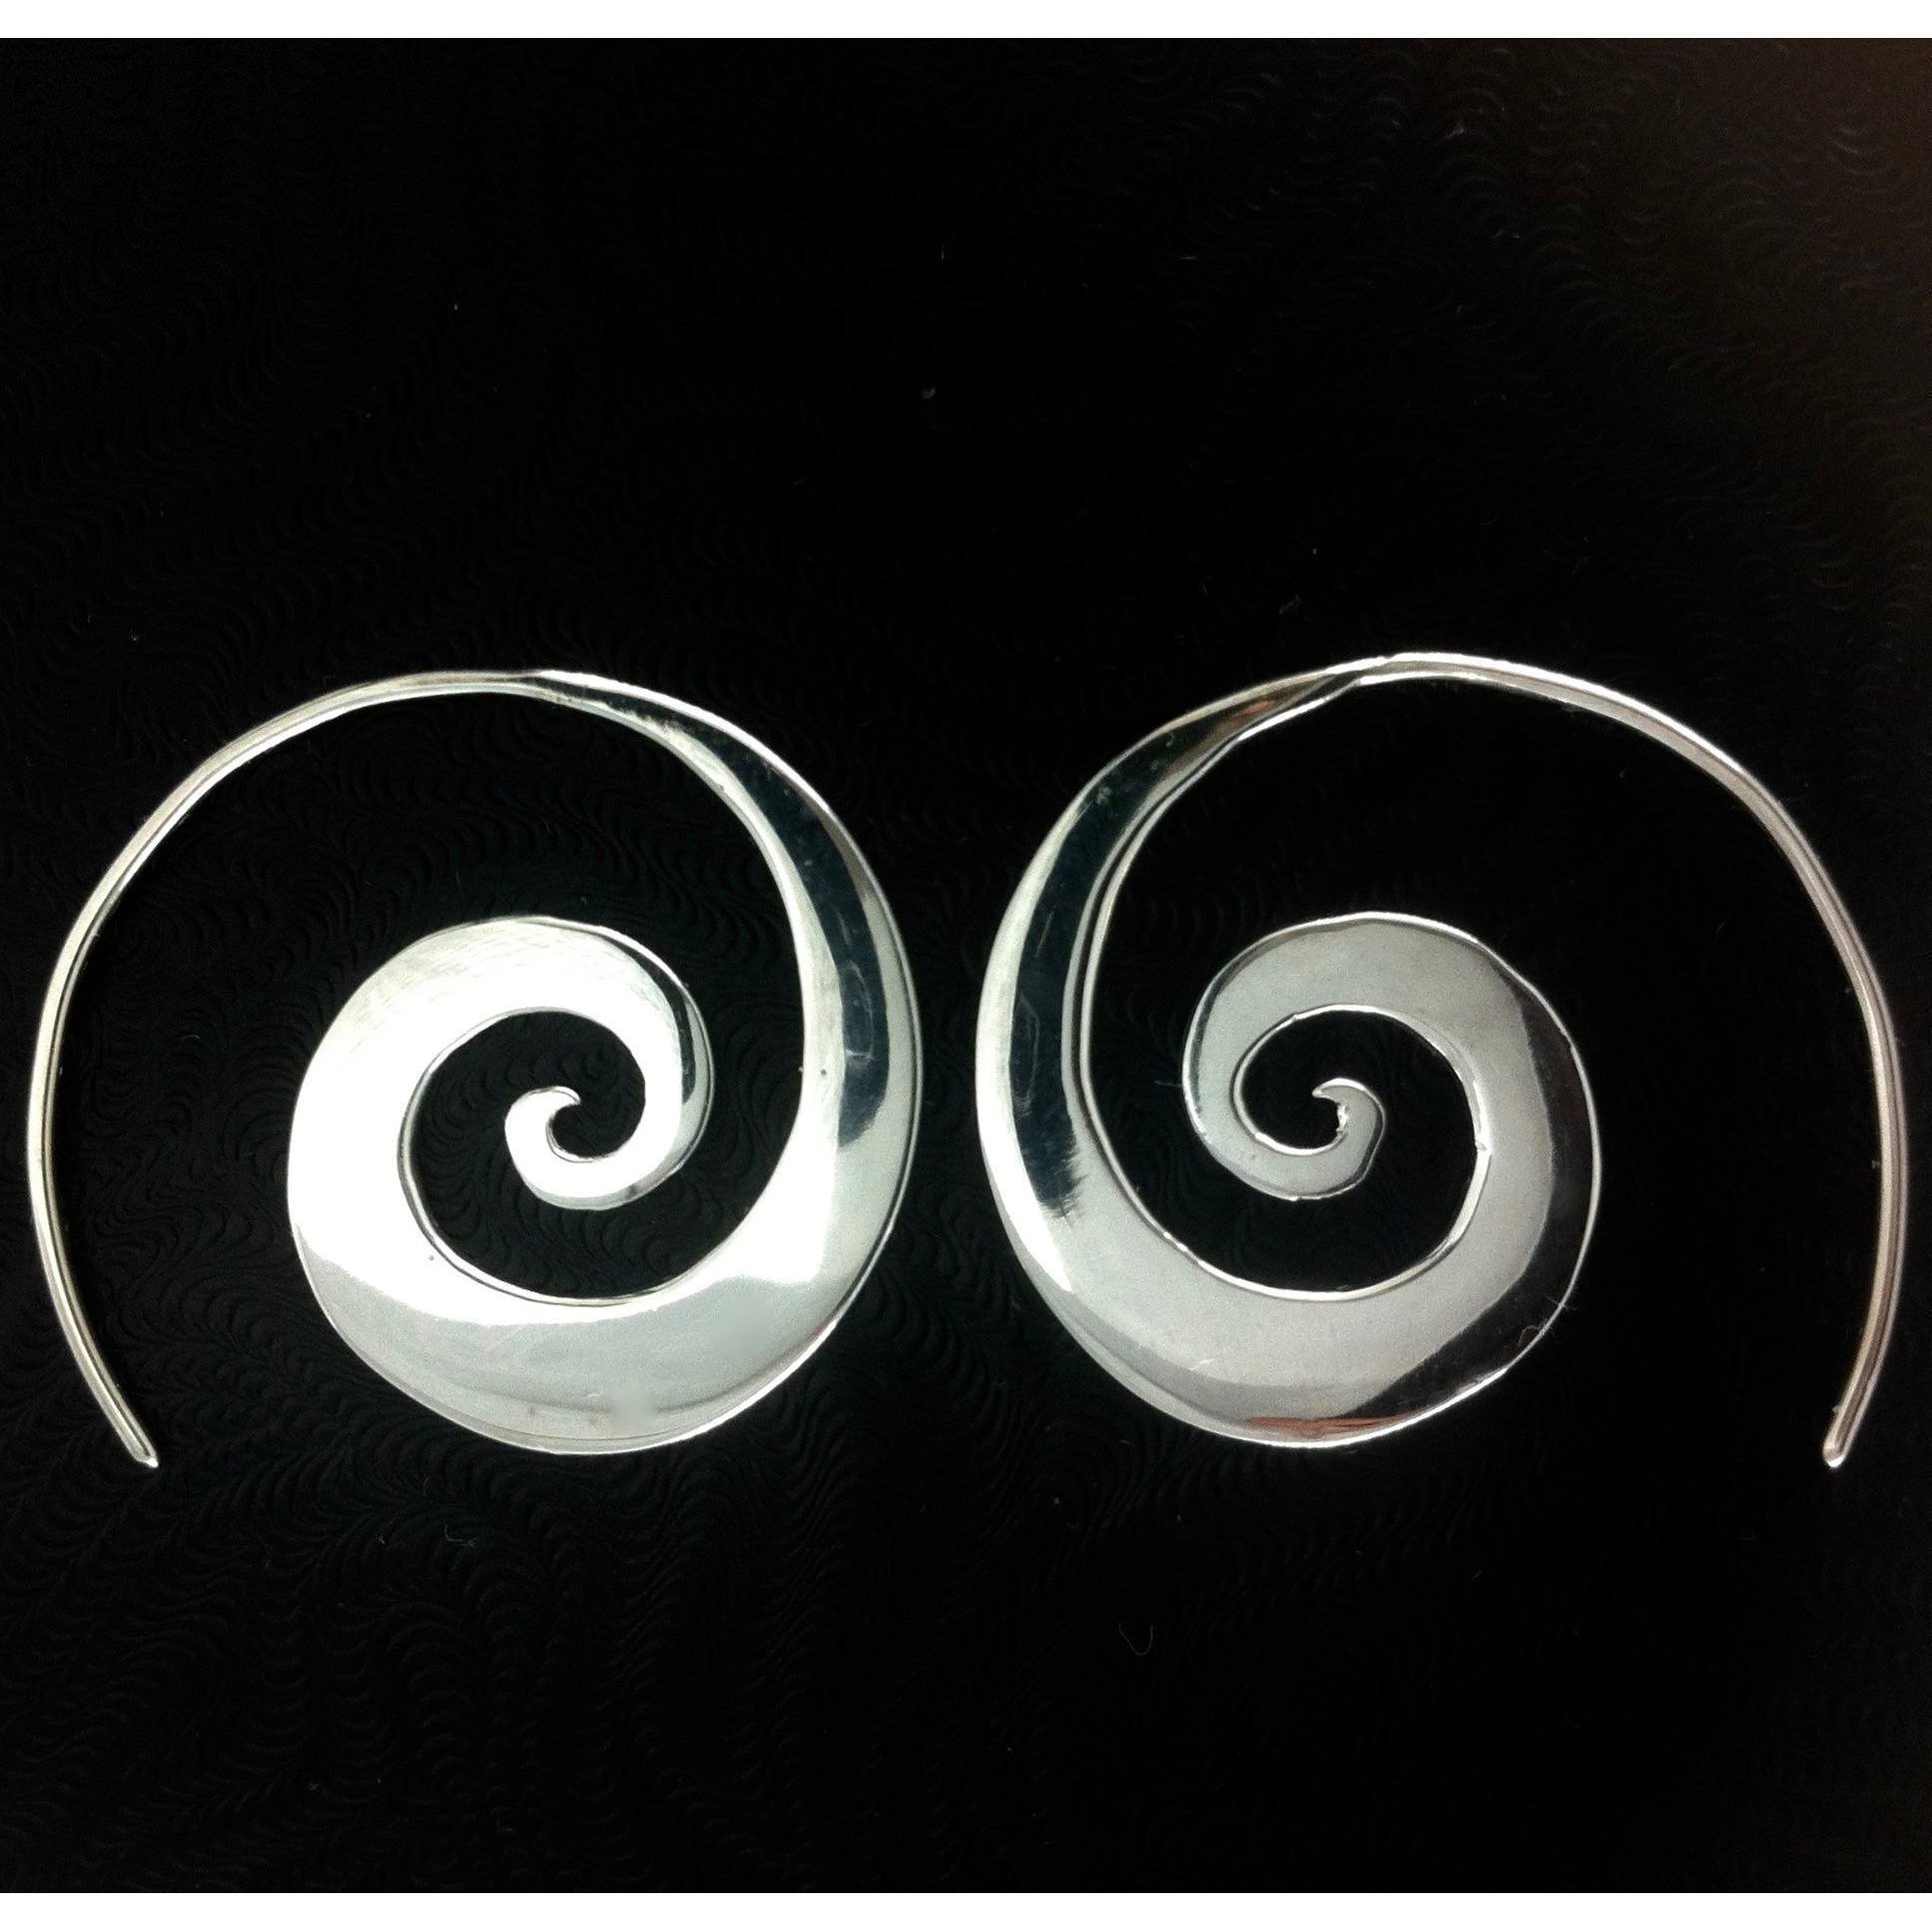 Tribal Earrings :|: Spiral. sterling silver, 925 tribal earrings. | Tribal Silver Earrings